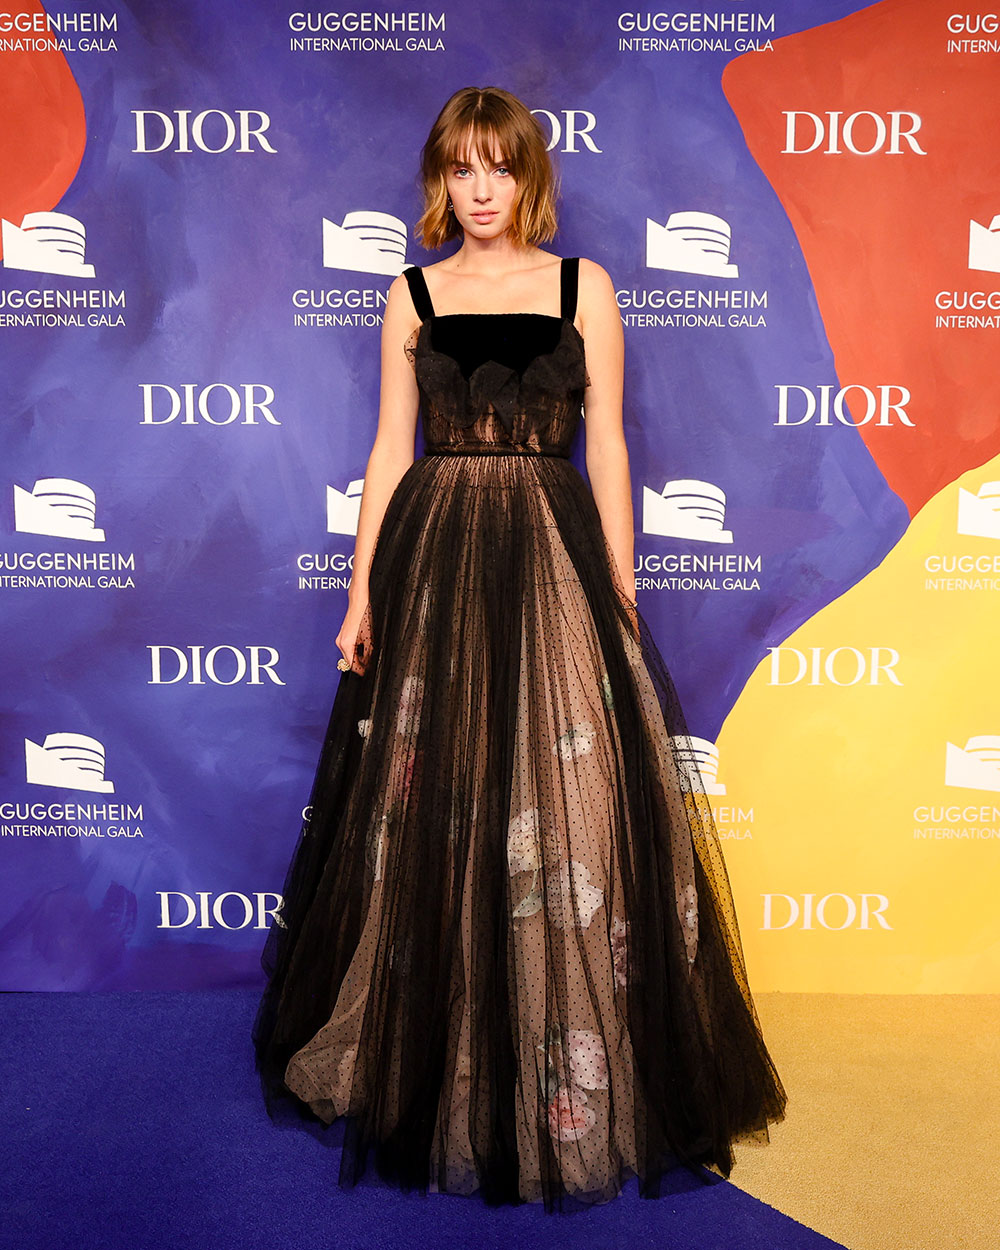 Maya-Hawke-wore-a-Dior-Haute-Couture-Spring-Summer-2017-al-Guggenheim-Gala-press-office